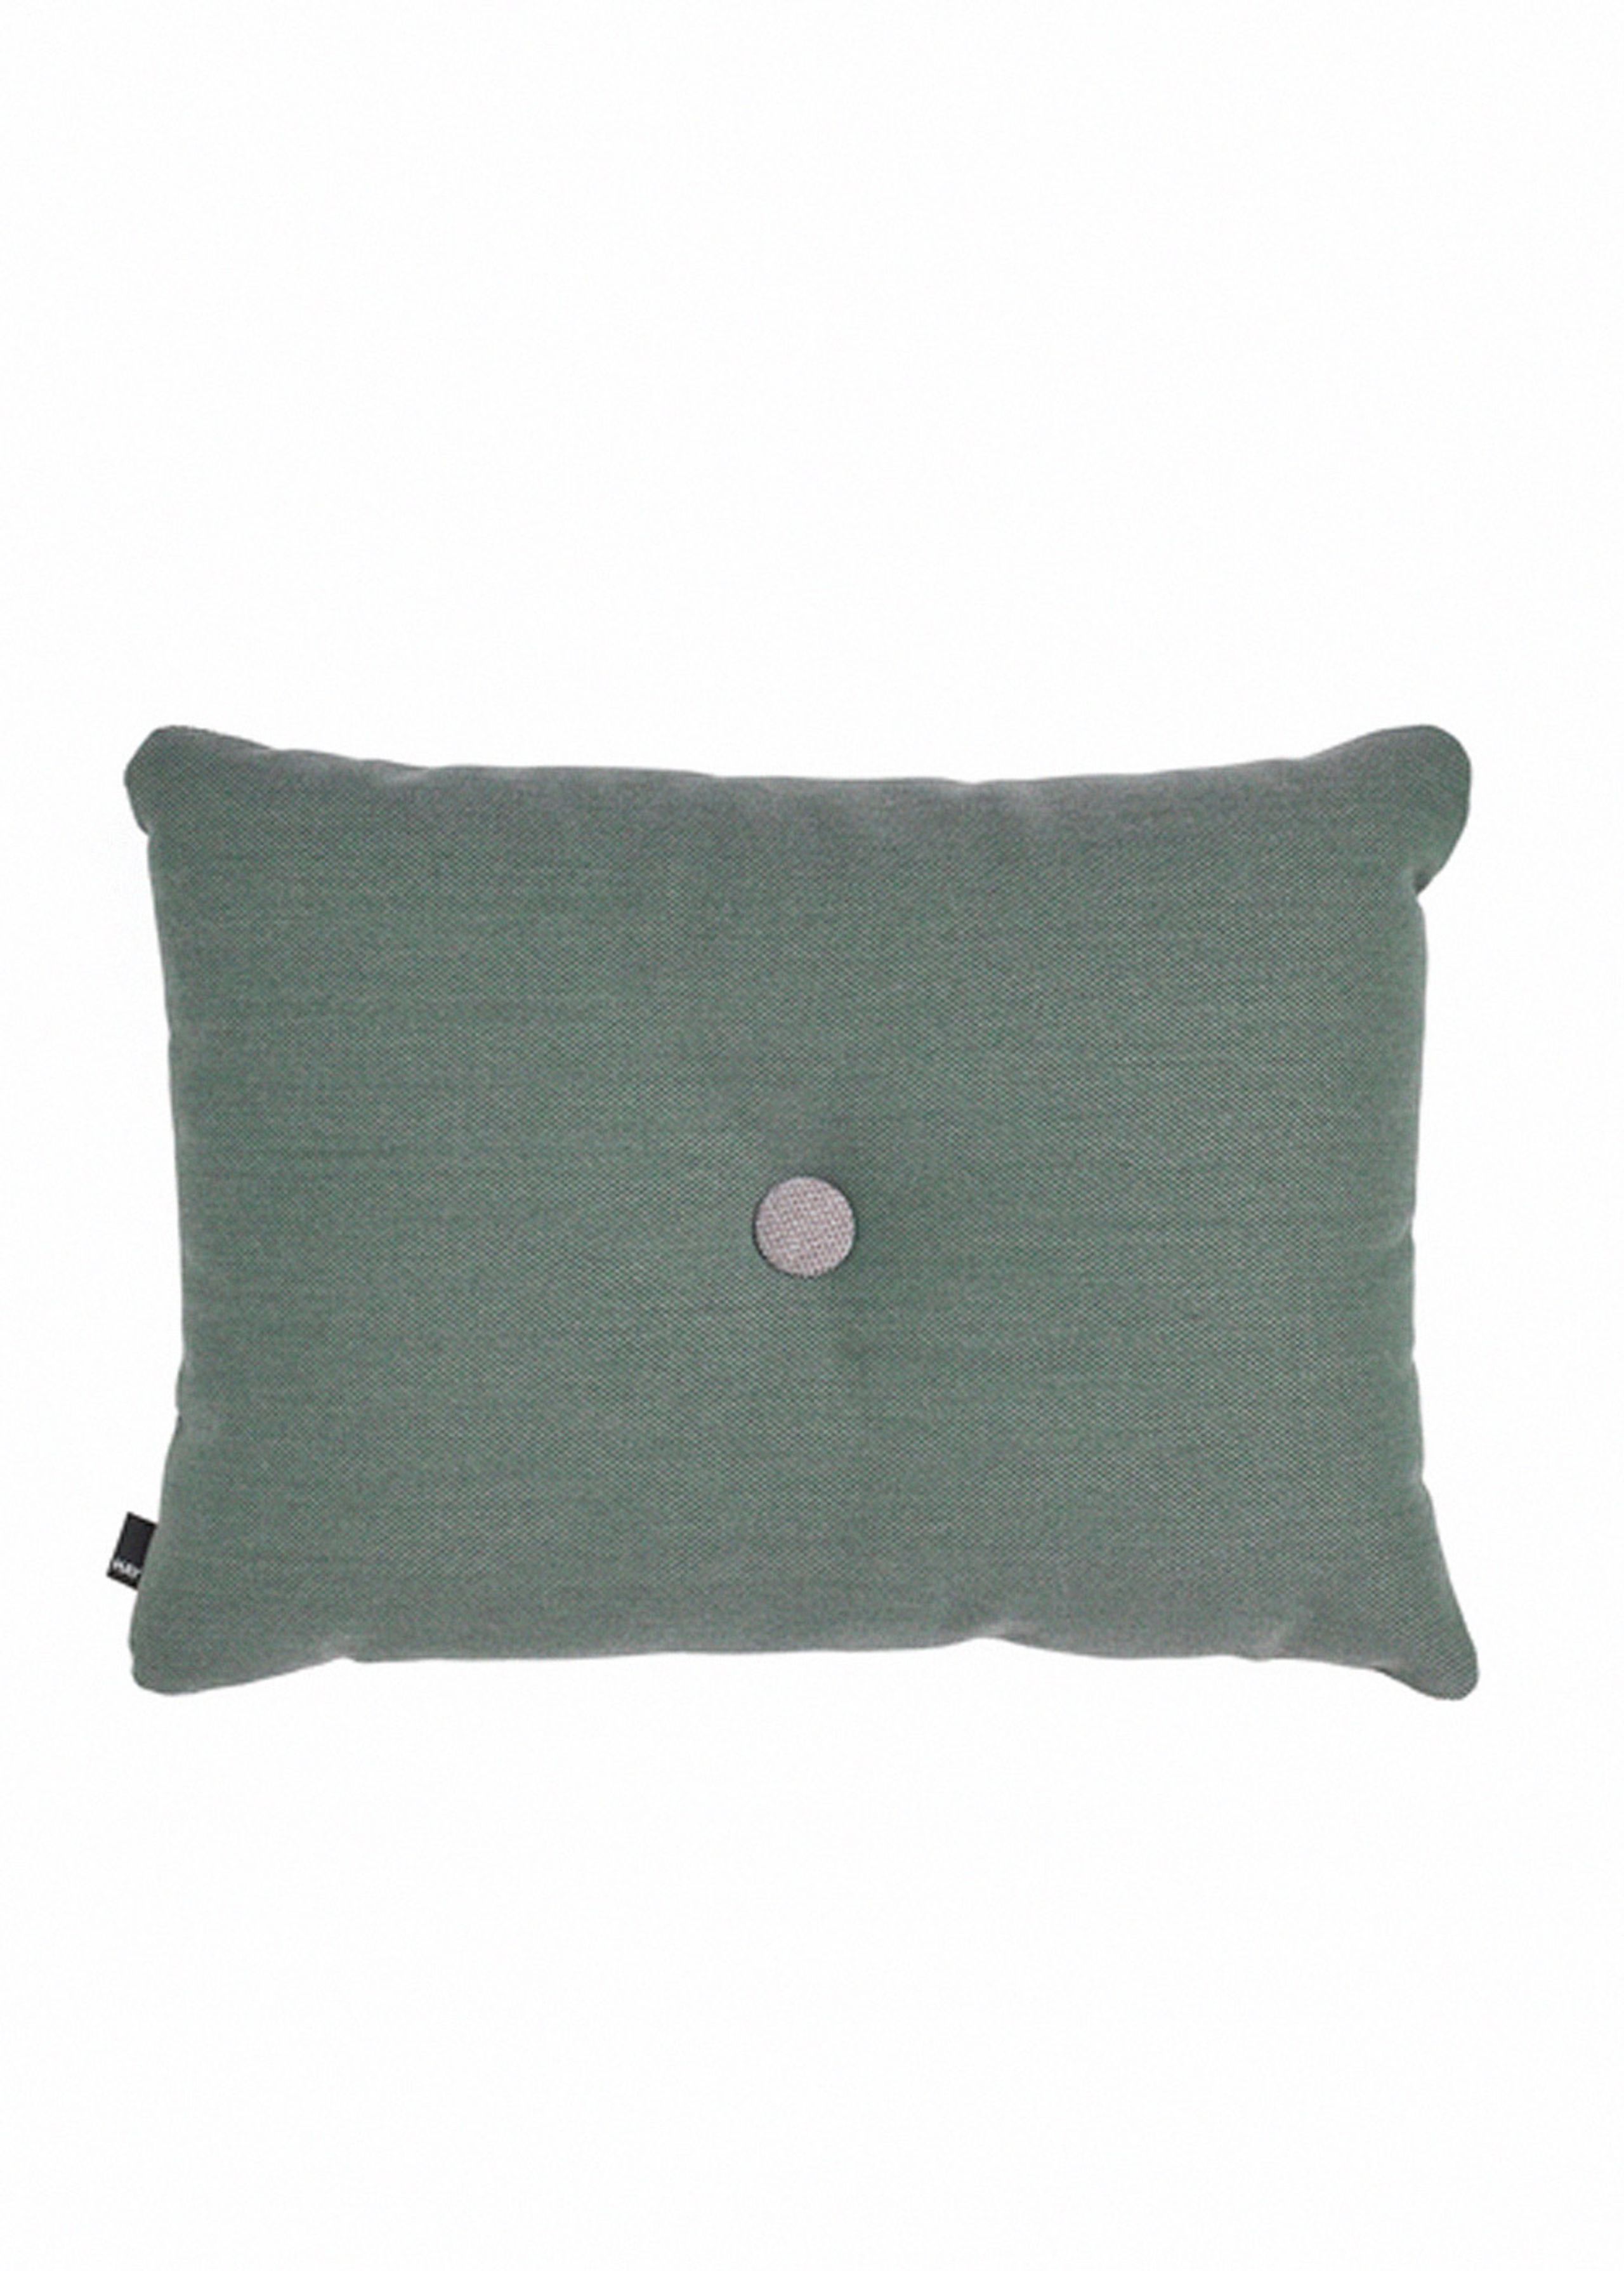 HAY - Pude - DOT Cushion / one dot - ST/Green